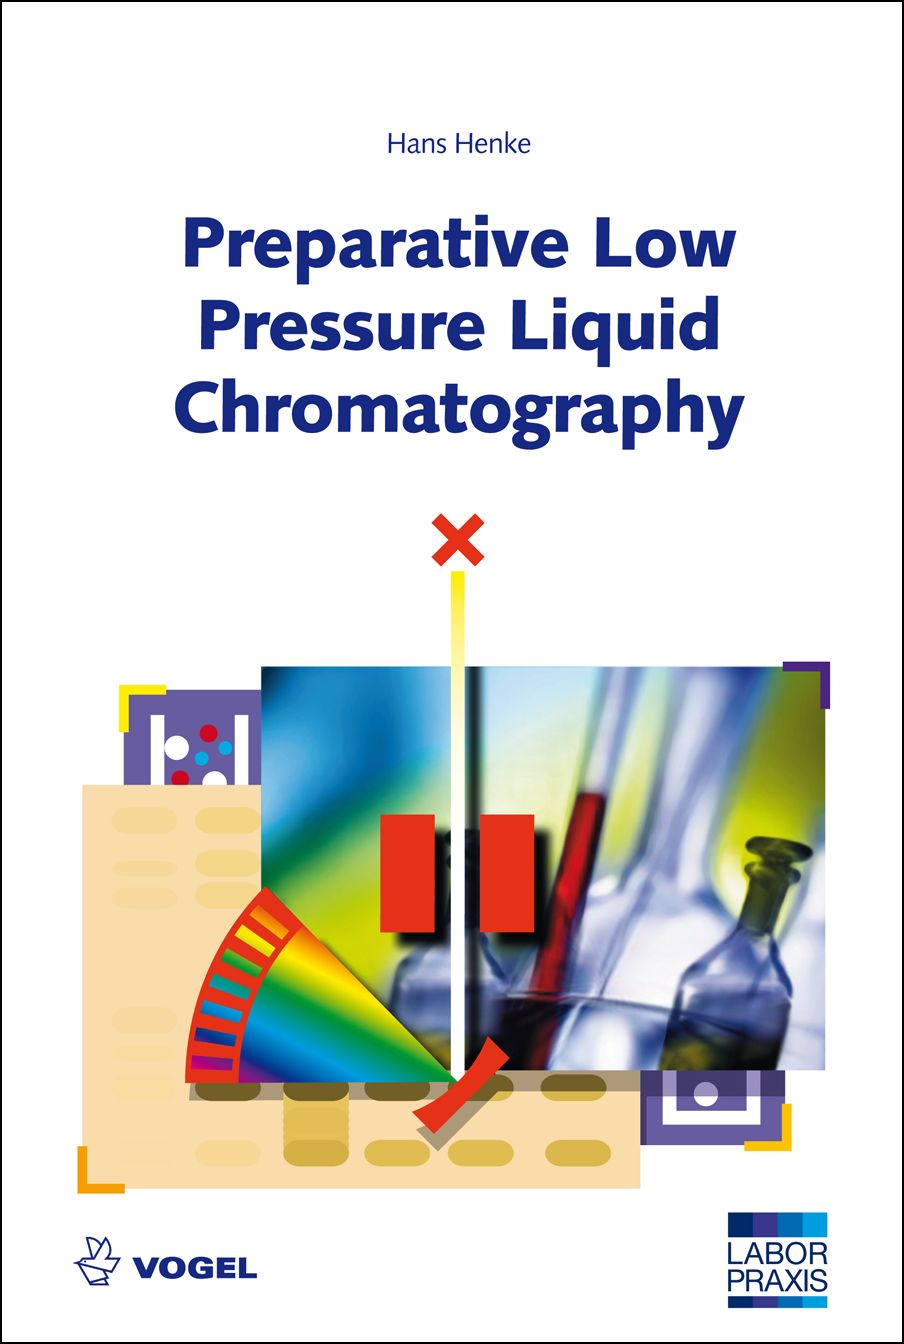 The specialist book "Preparative Low Pressure Liquid Chromatography" of Hans Henke